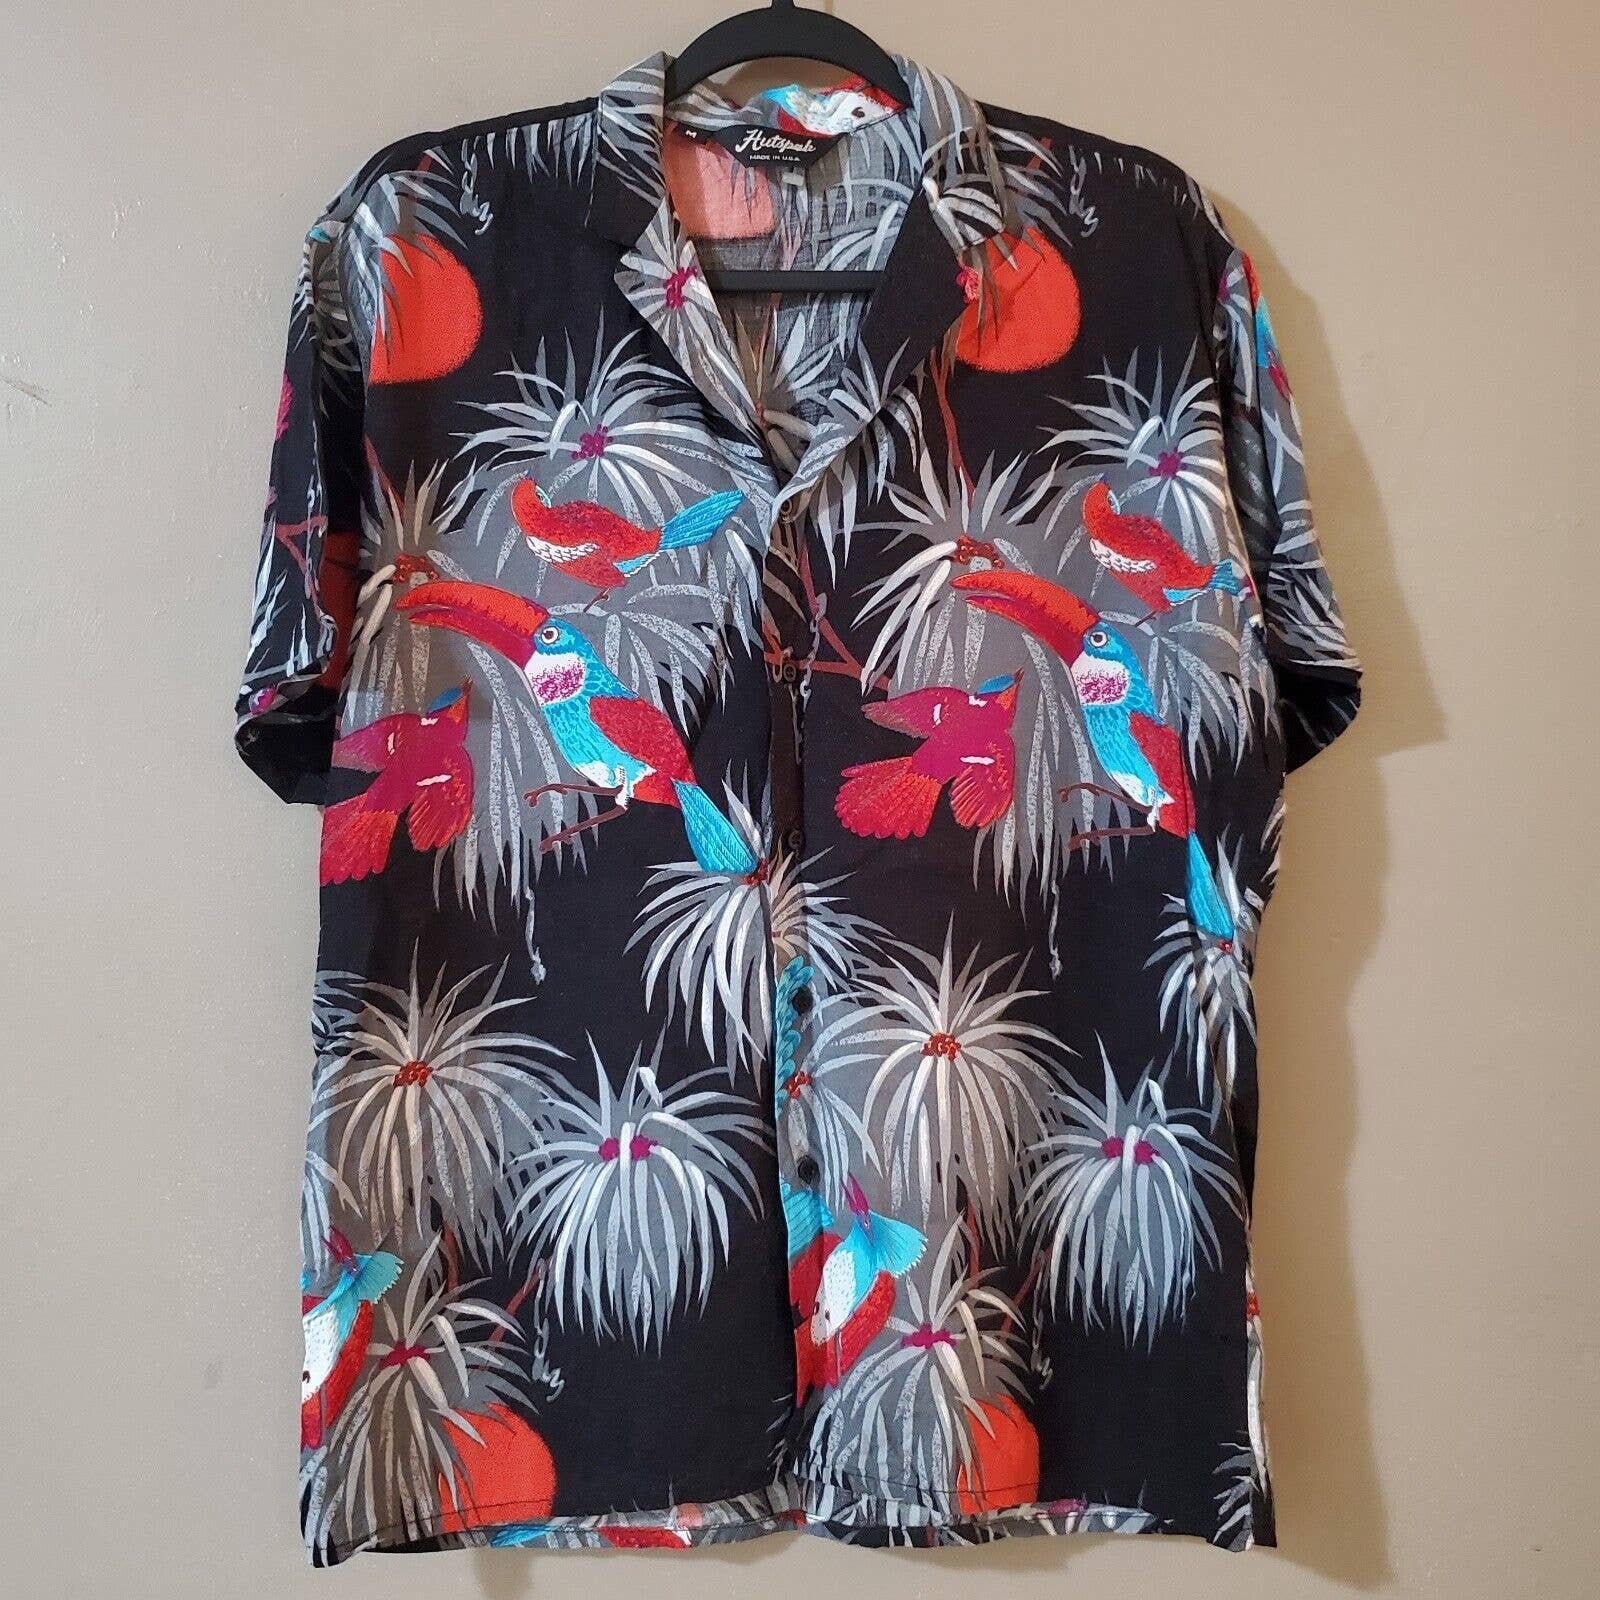 Vintage VTG 70’s 80’s Hutspah Cocktails Shirt